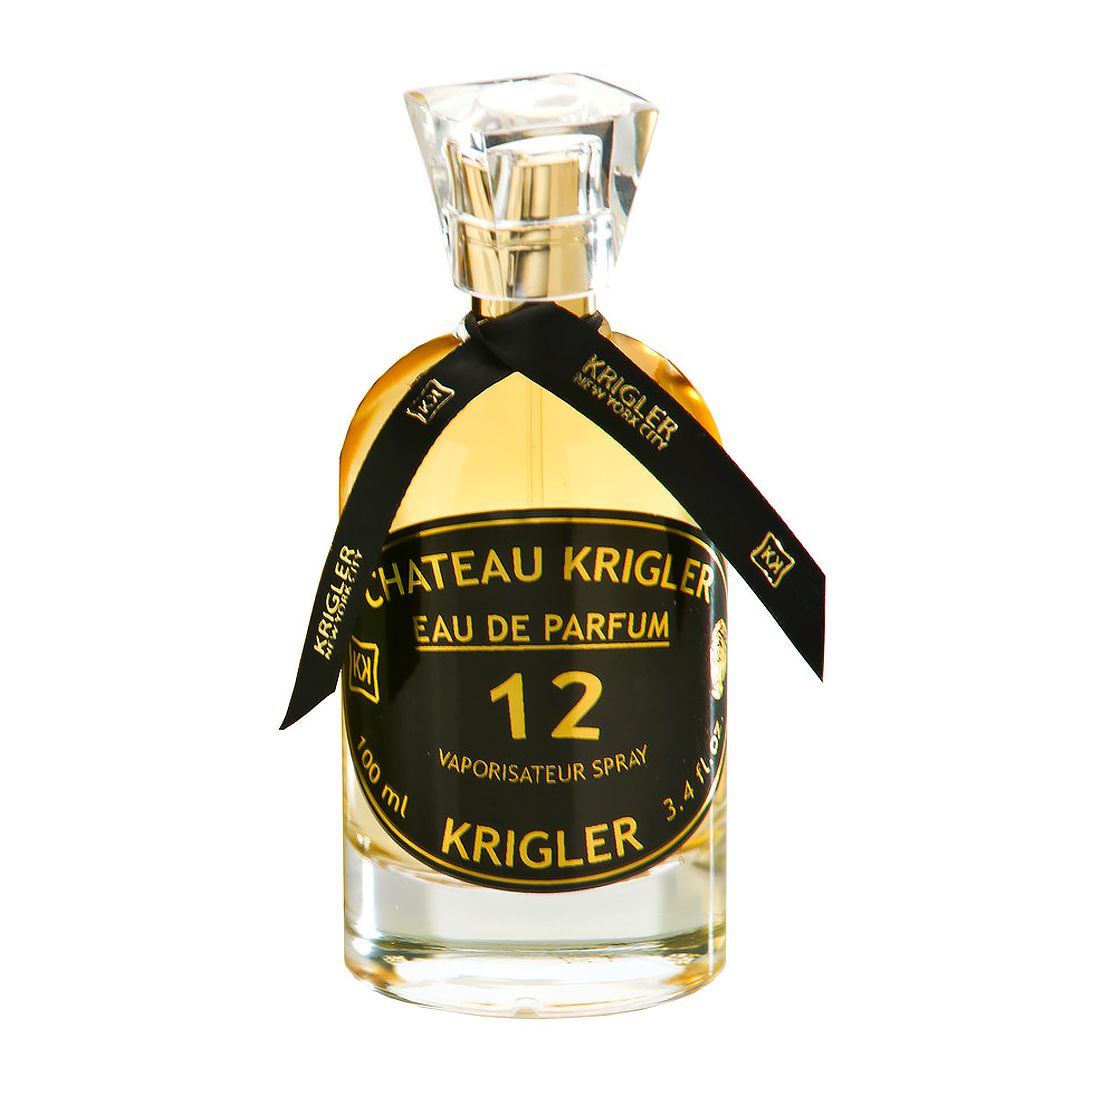 Krigler Chateau Krigler 12 Fragrance